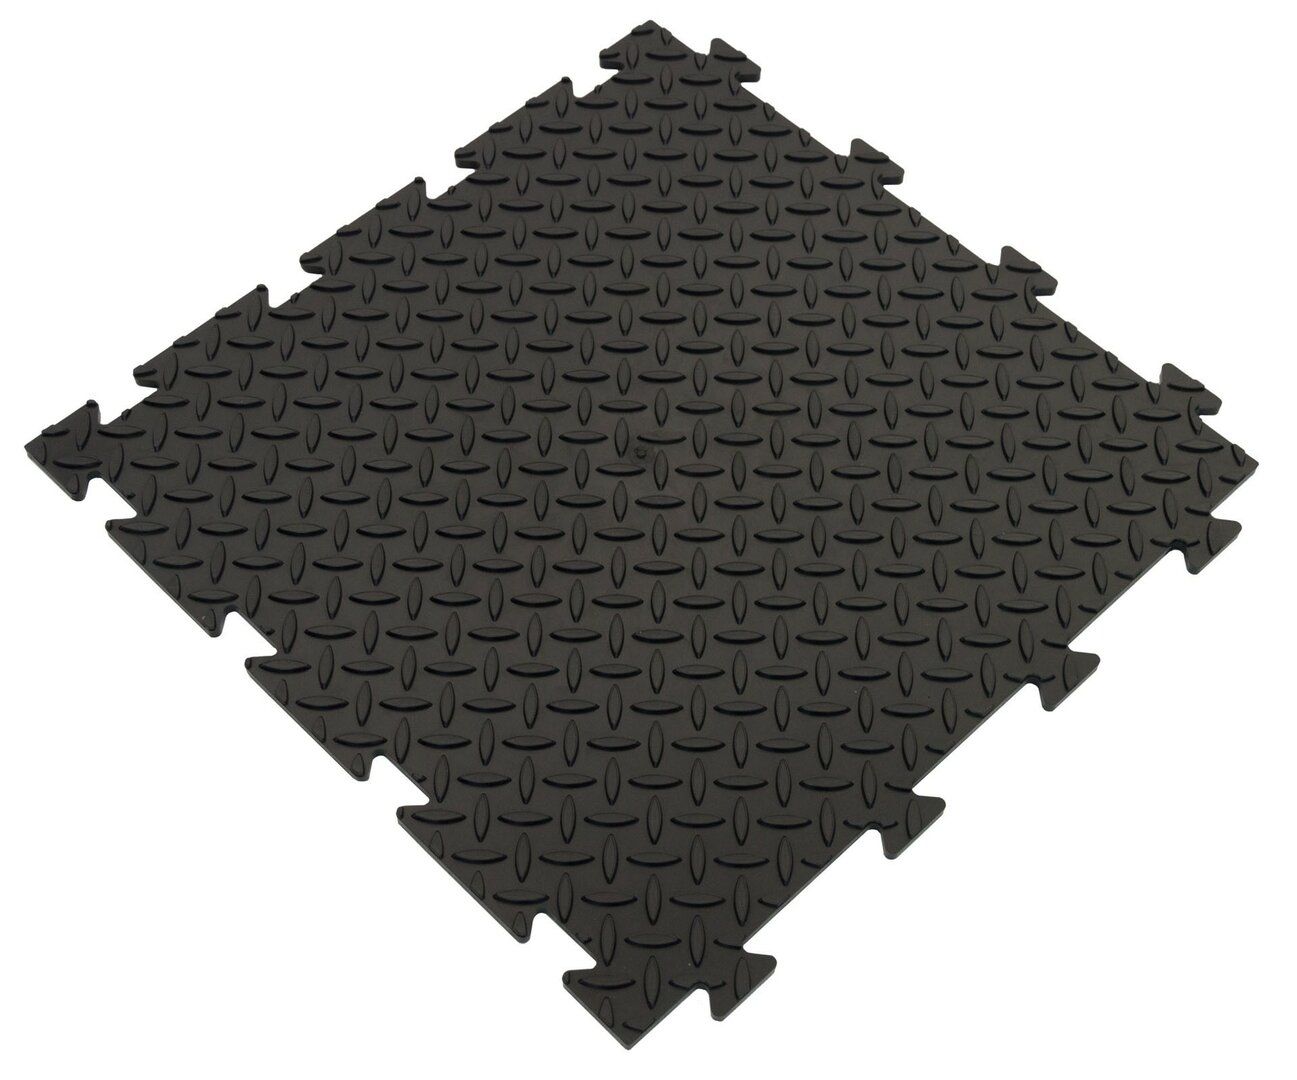 Černá PVC vinylová zátěžová puzzle protiskluzová dlažba Tenax (diamant) - délka 47,5 cm, šířka 47,5 cm, výška 0,8 cm